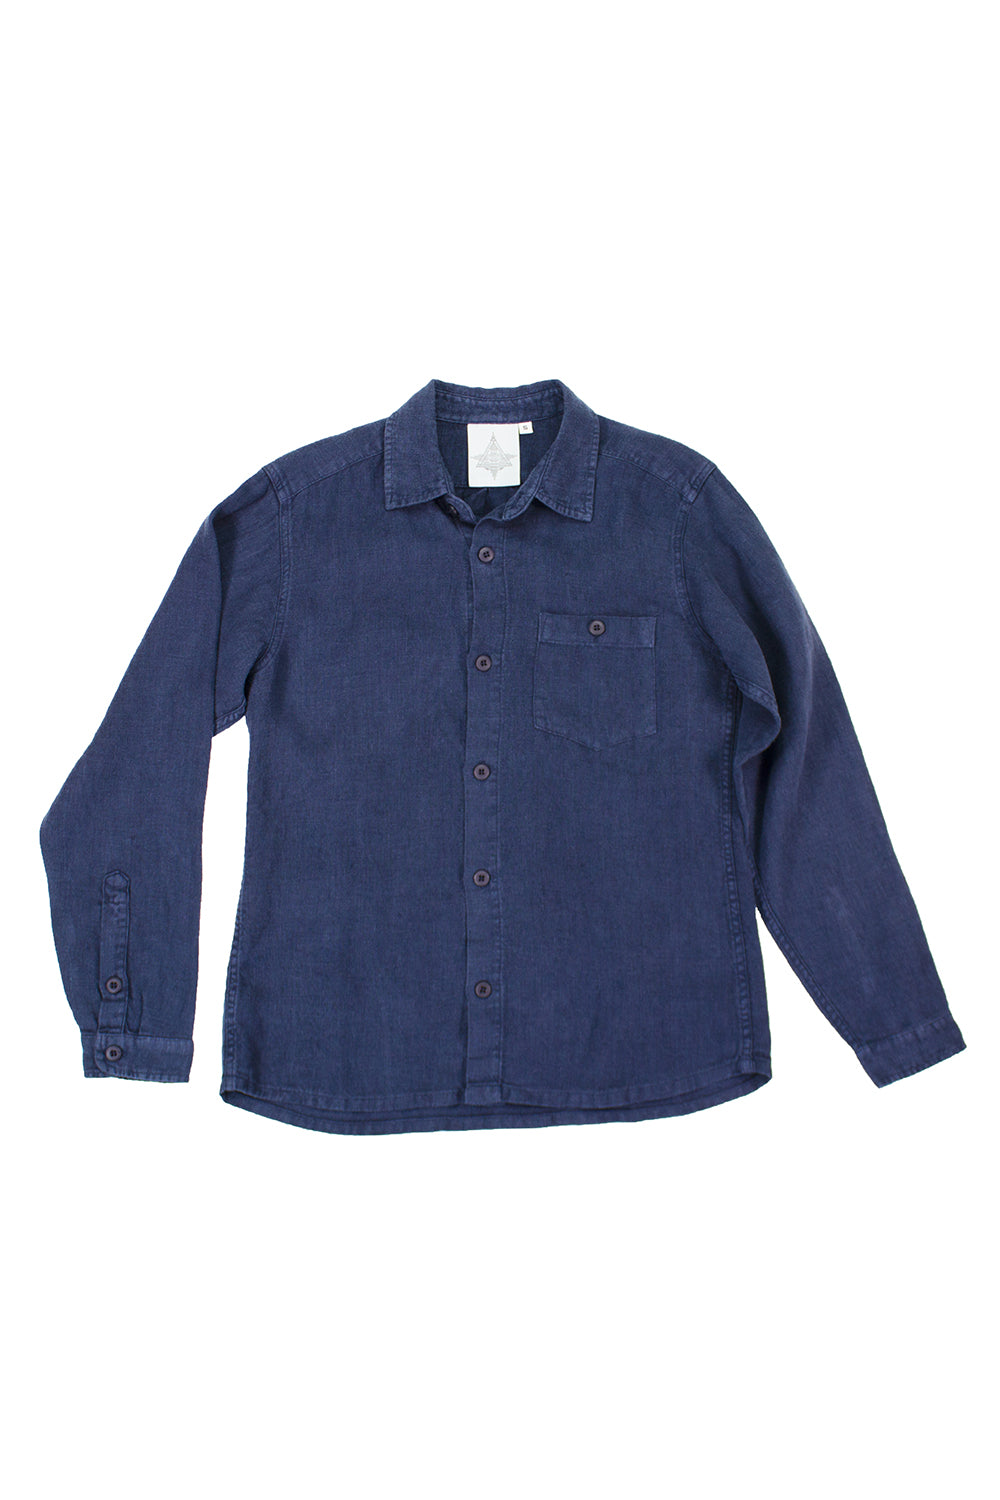 Lassen 100% Hemp Shirt | Jungmaven Hemp Clothing & Accessories / Color: Navy